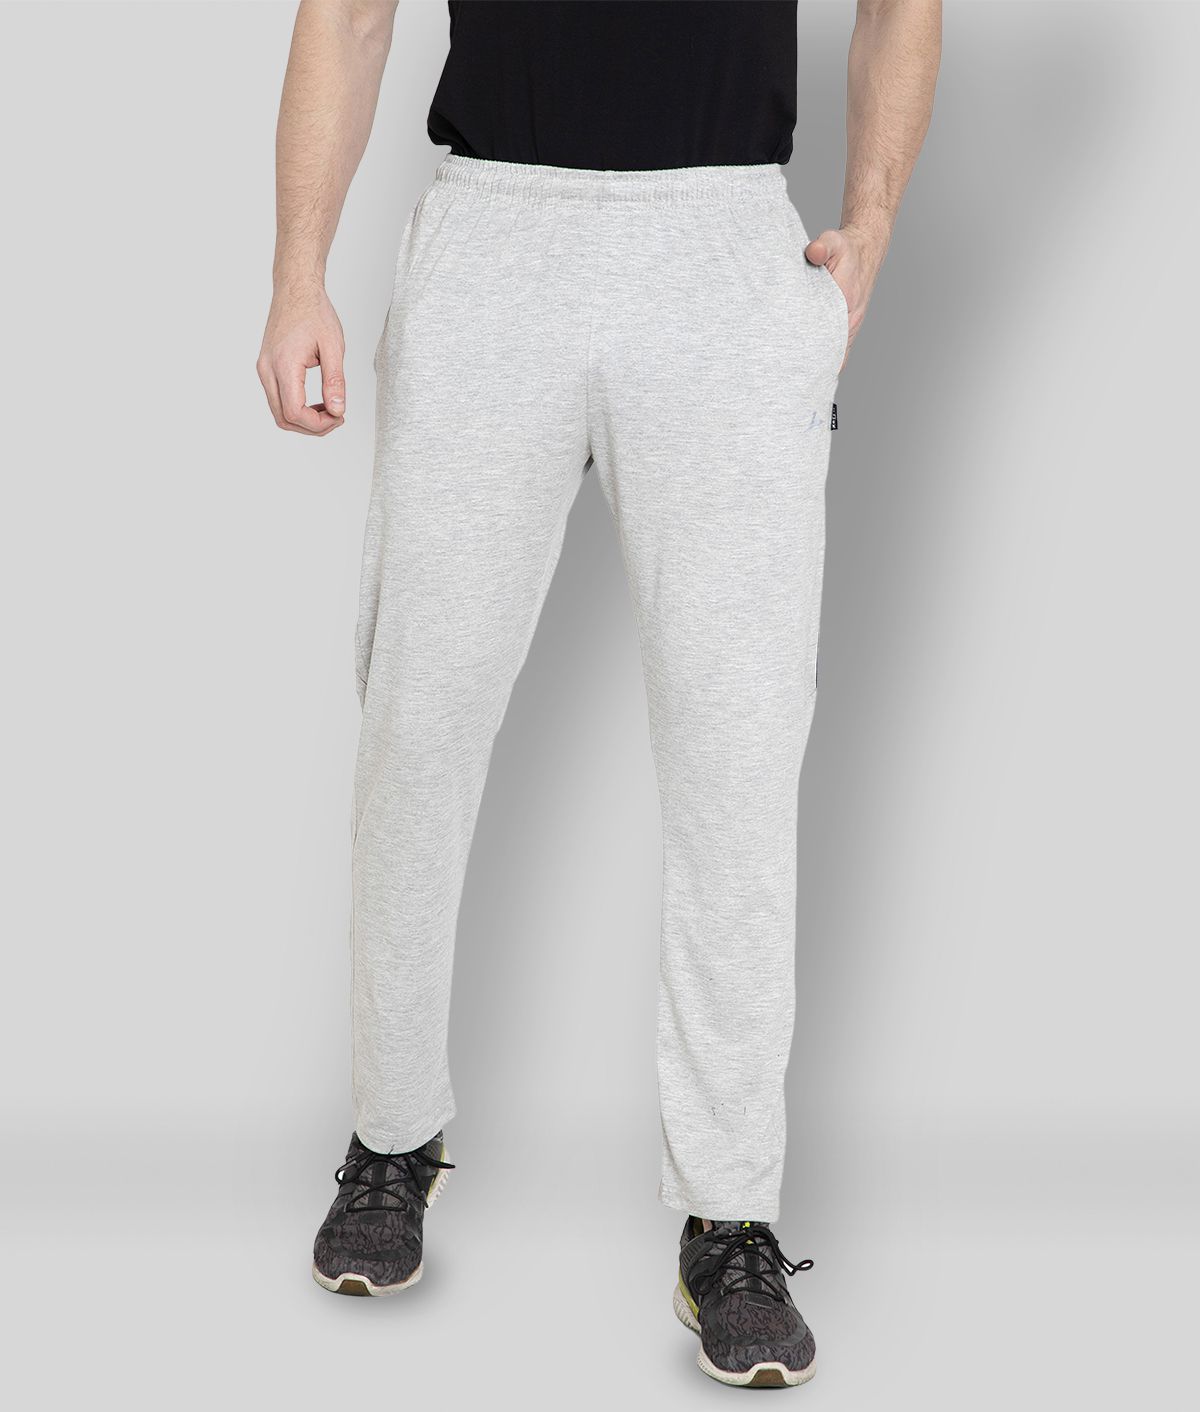     			Zeffit - Light Grey Cotton Blend Men's Sports Trackpants ( Pack of 1 )